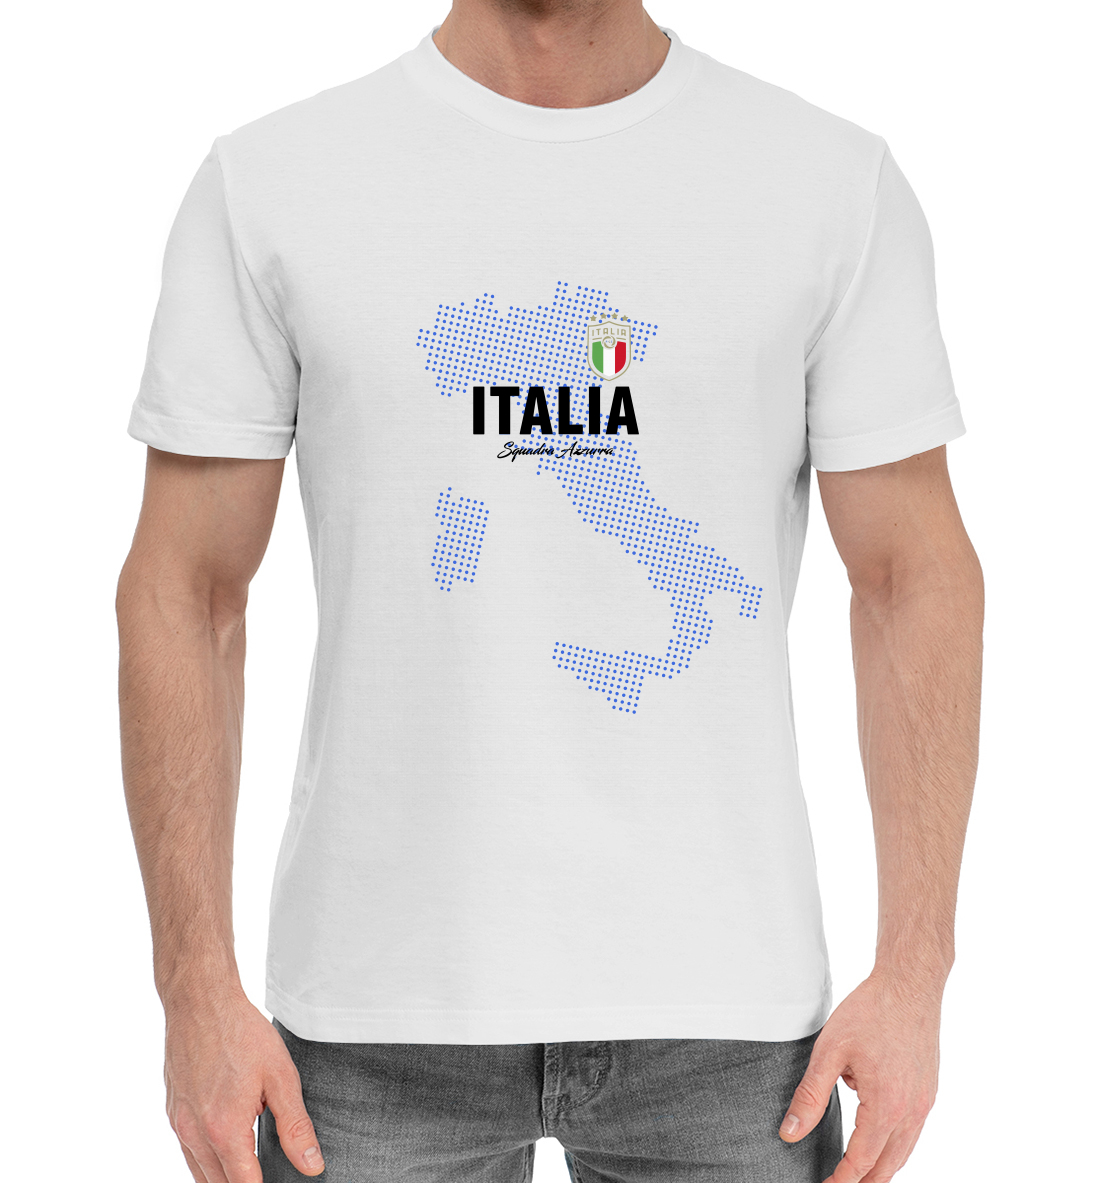 Мужская Хлопковая футболка Италия, артикул FNS-186686-hfu-2mp